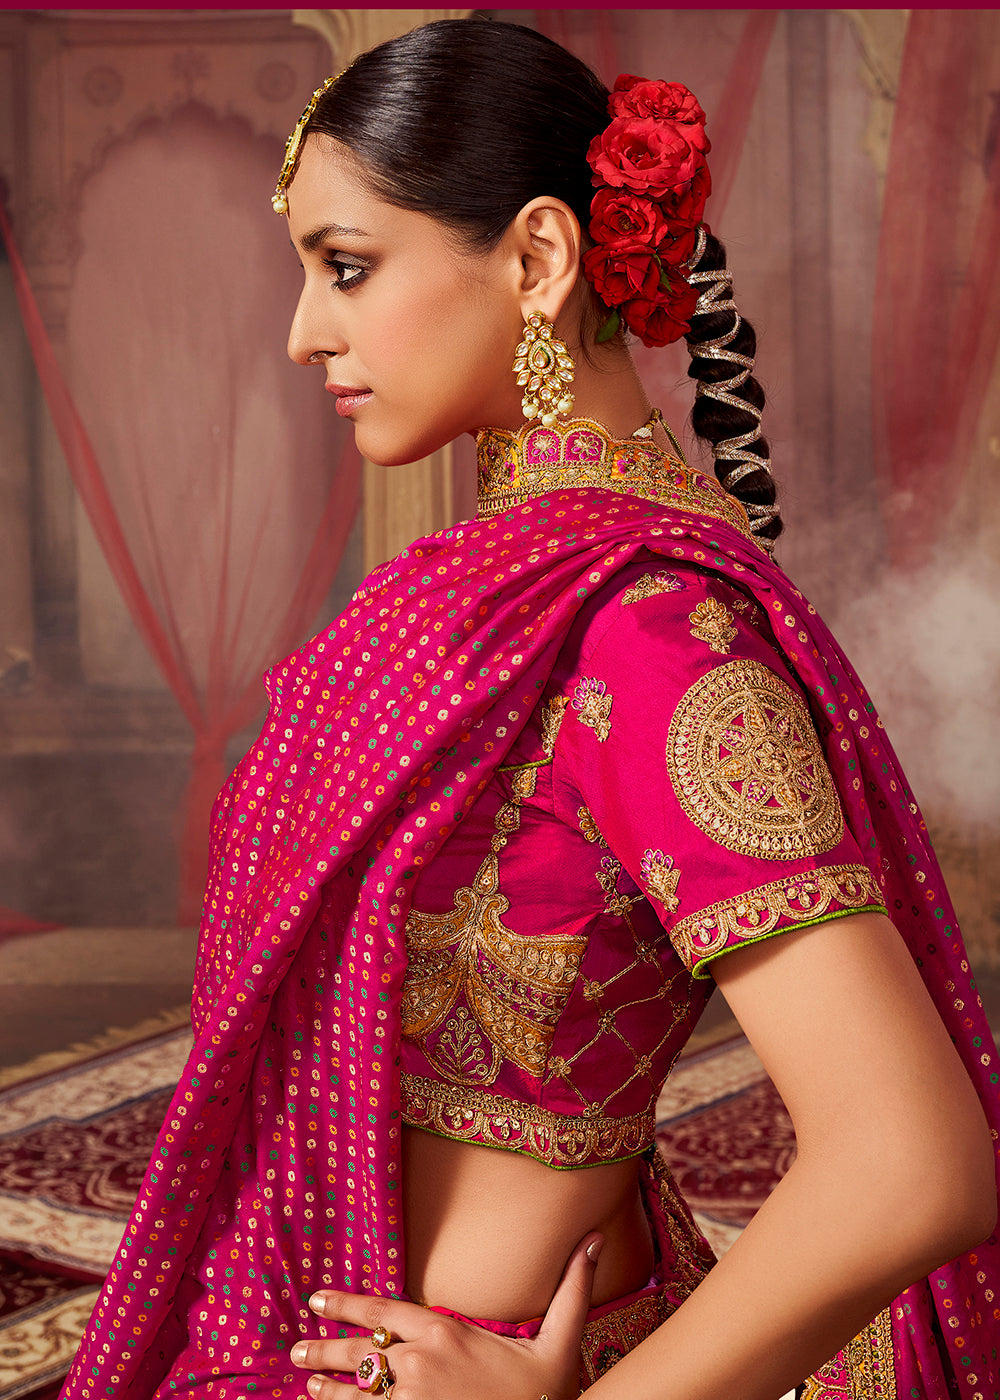 Women Clothing Online Store: Latest Designer Lehenga Sarees Online Shopping  For Diwali Festival Discount Offer Price 2015